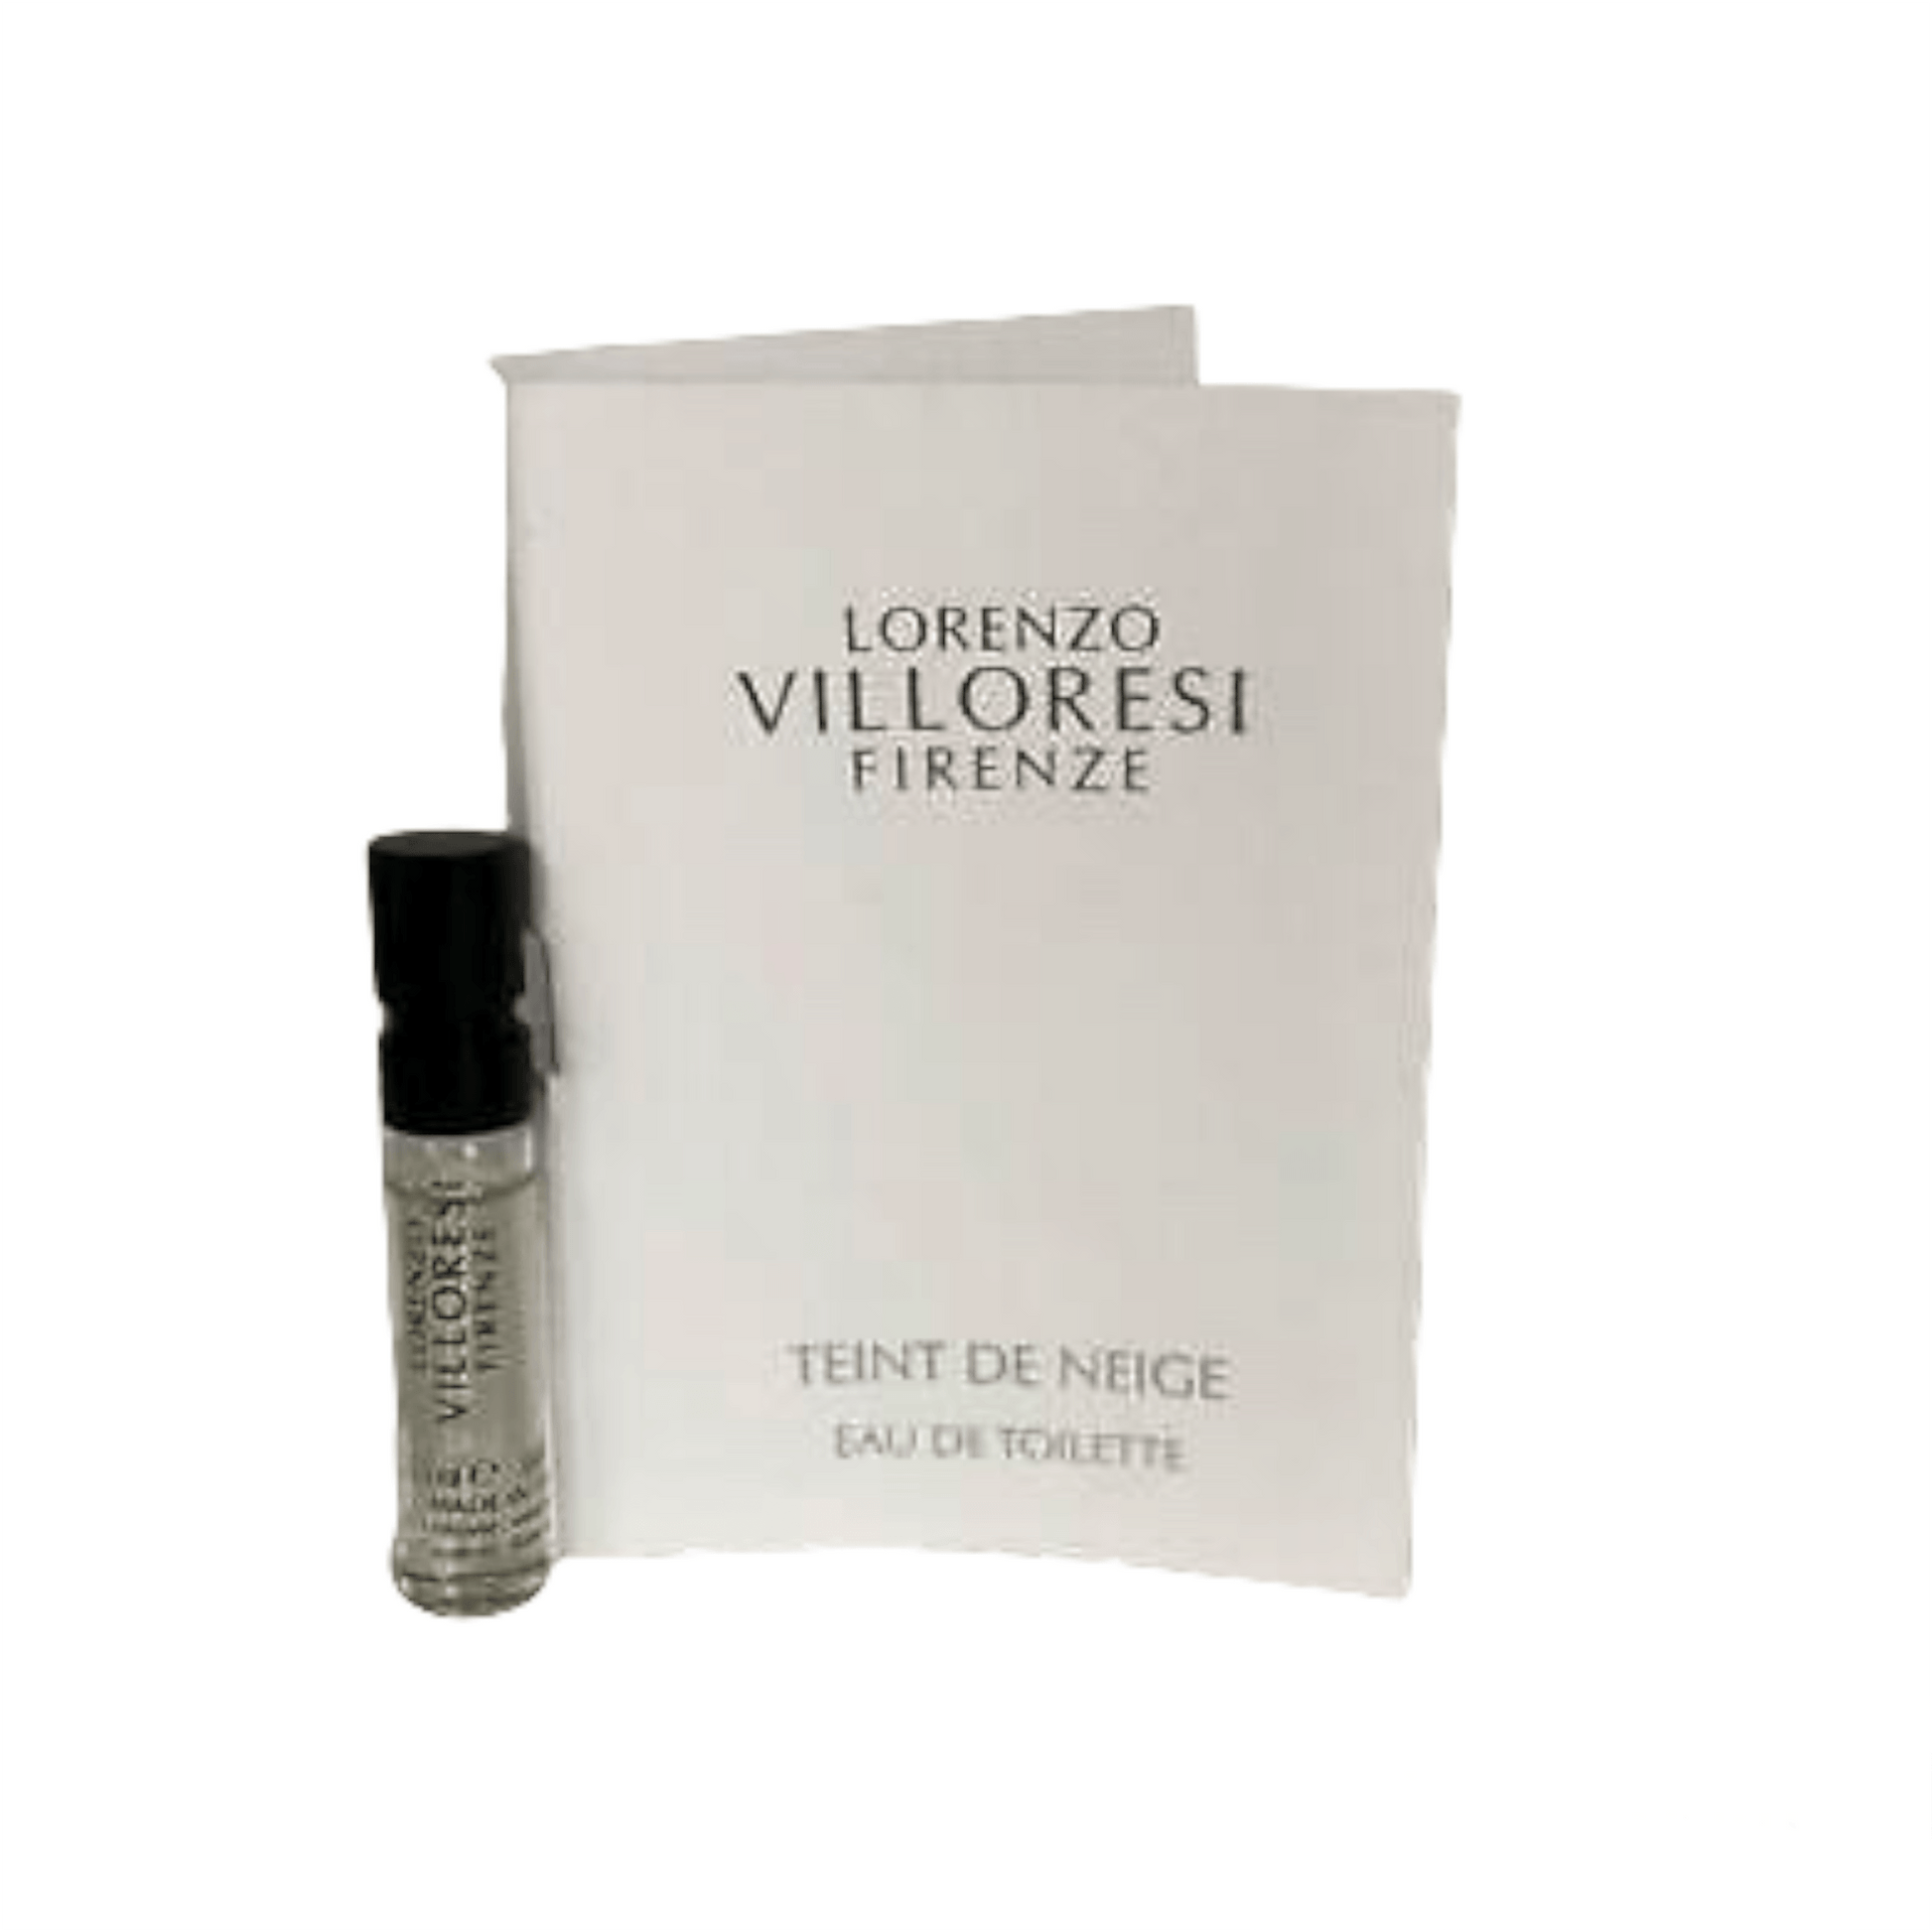 Lorenzo Villoresi Firenze Teint de Neige 官方香水样品 2ml 0.06 fl。 盎司